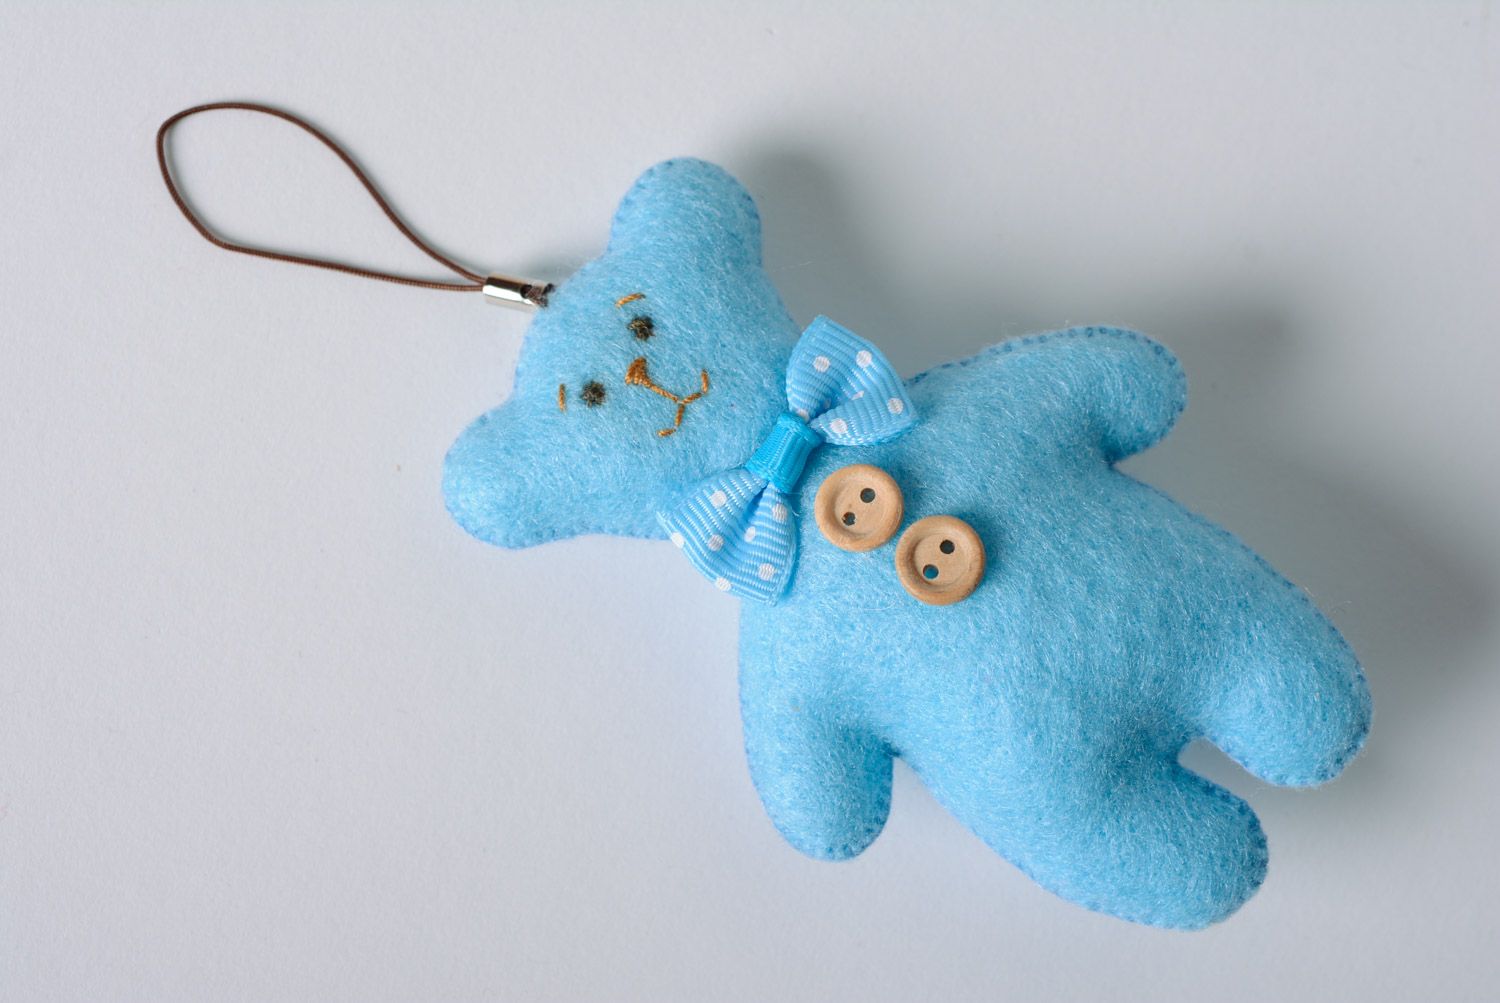 Handmade beautiful cute keychain toy blue bear made of felt for keys or bag  photo 1